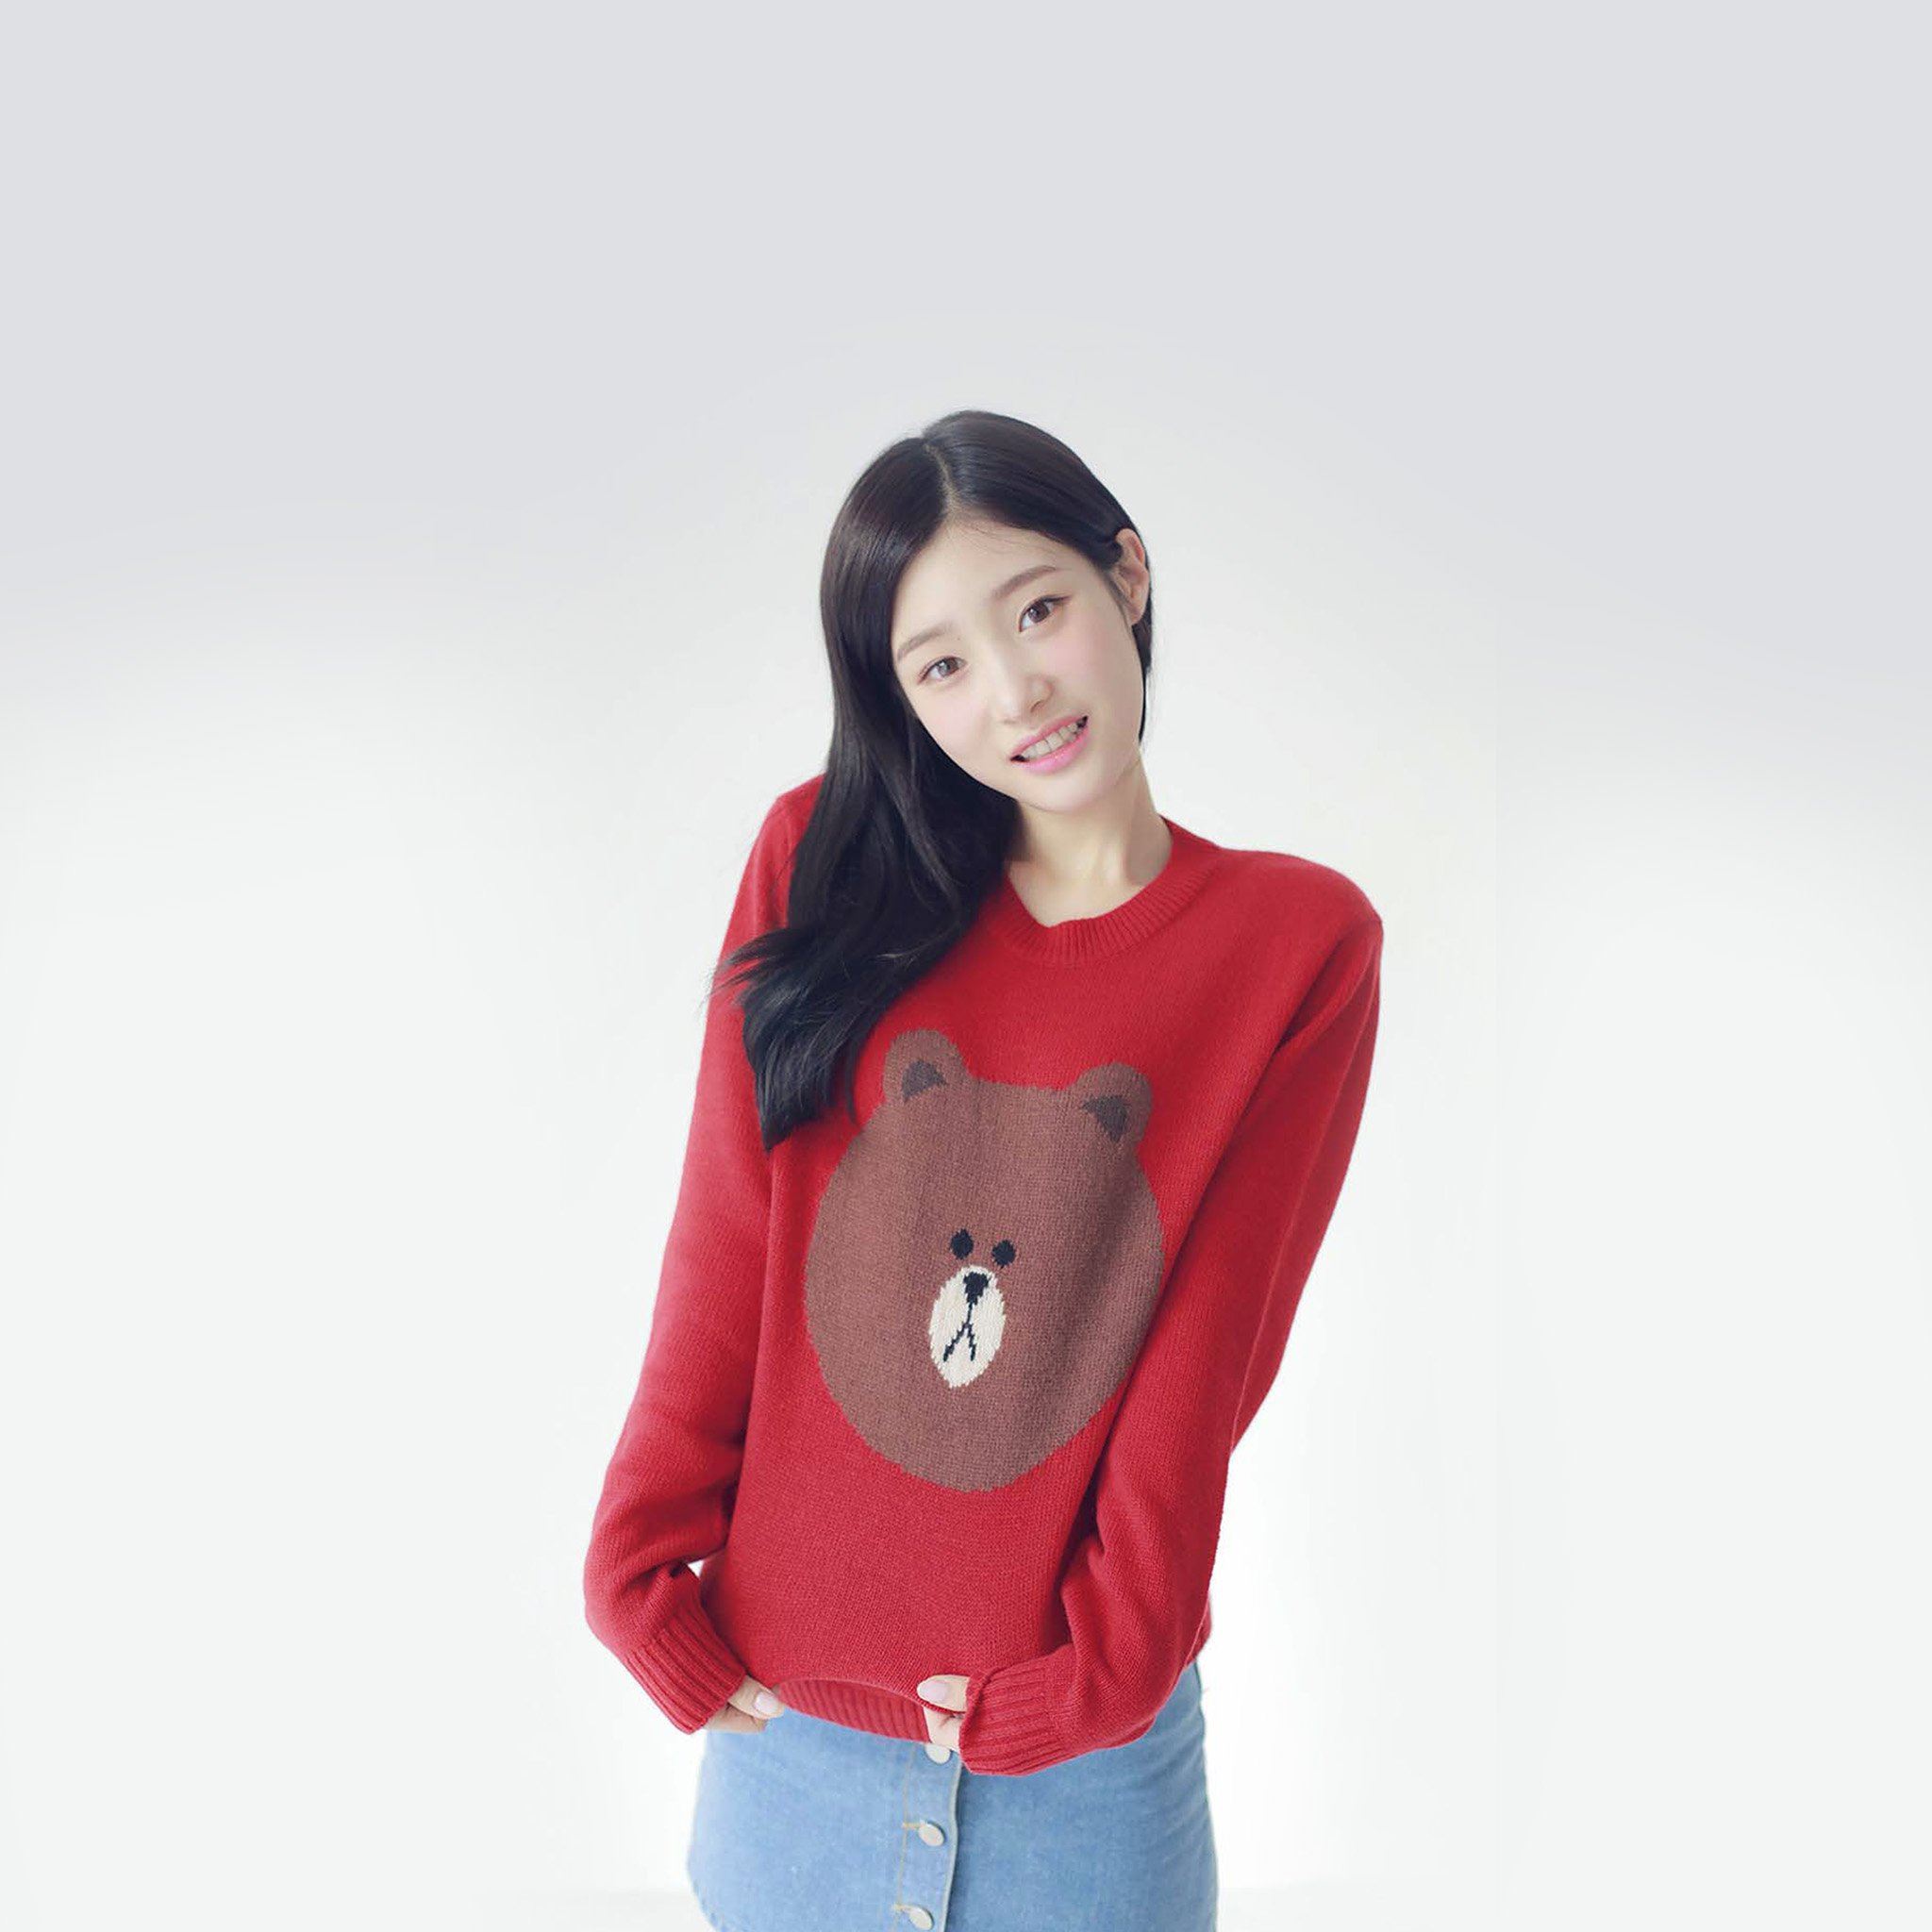 Chaeyeon Girl Kpop Cute iPad Air wallpaper 